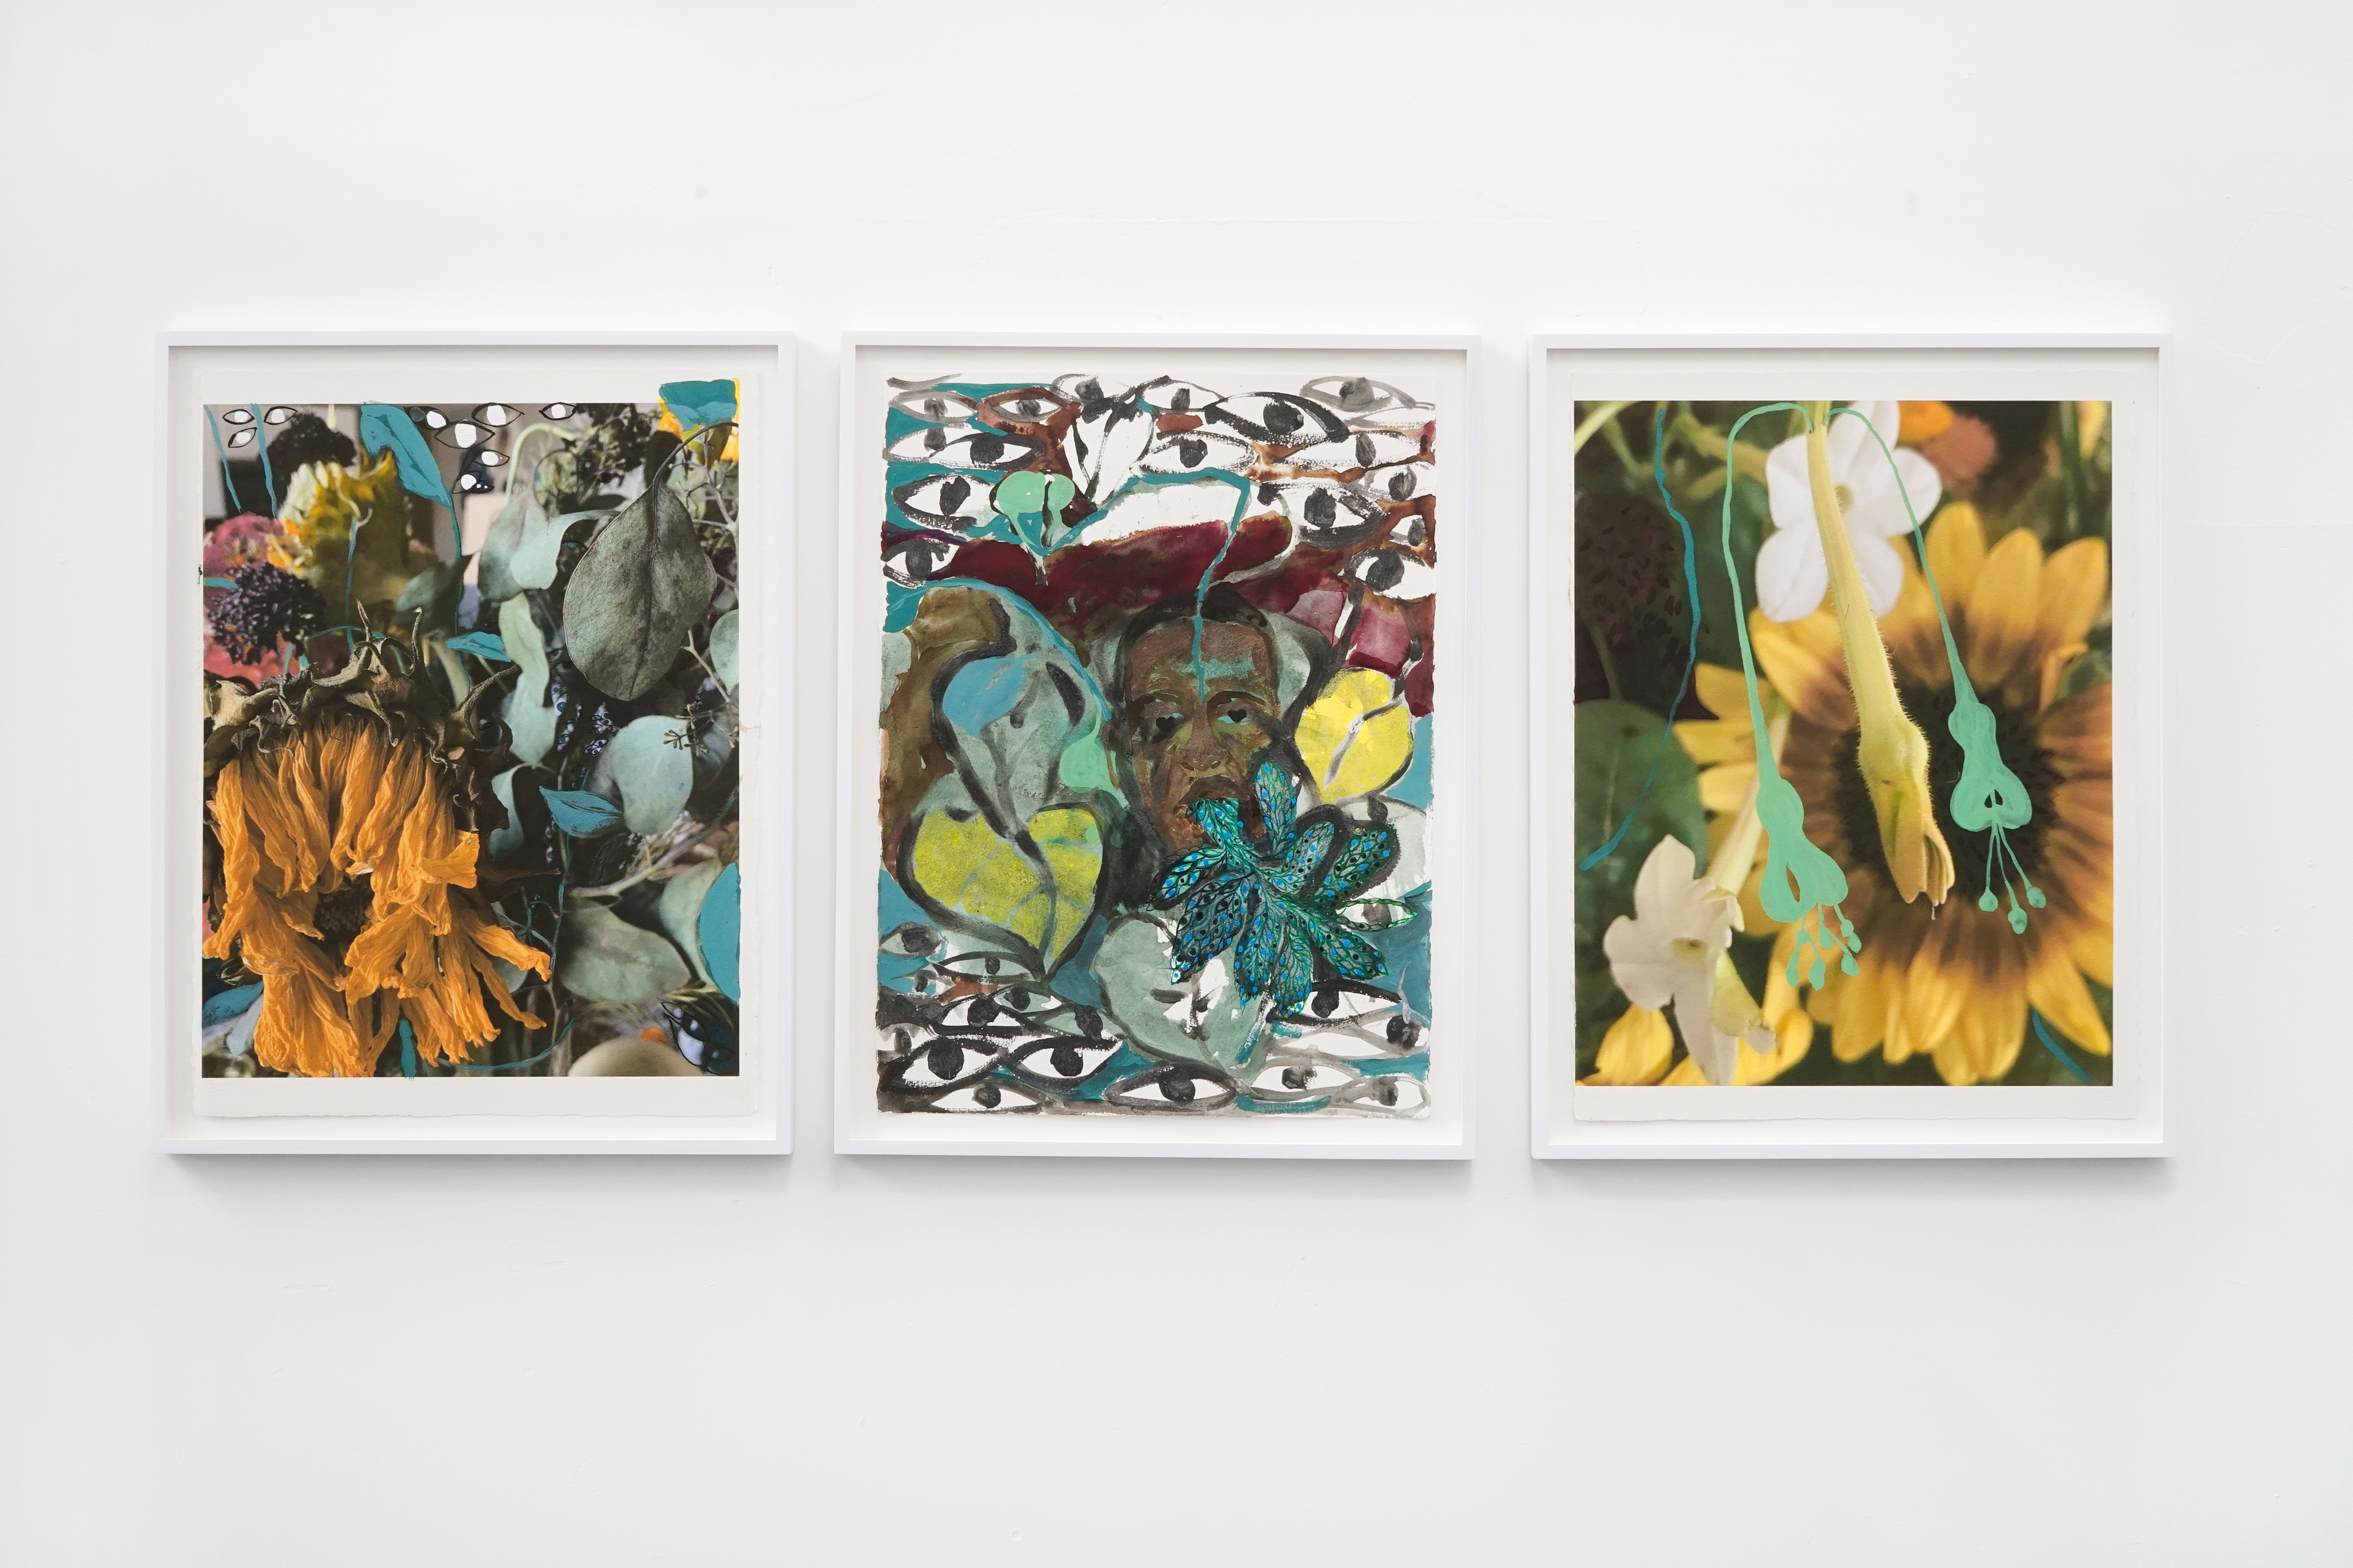 Galerie Barbara Thumm \ María Magdalena Campos-Pons \ _And His Last Breath Became a Tree of Eyes (2020)